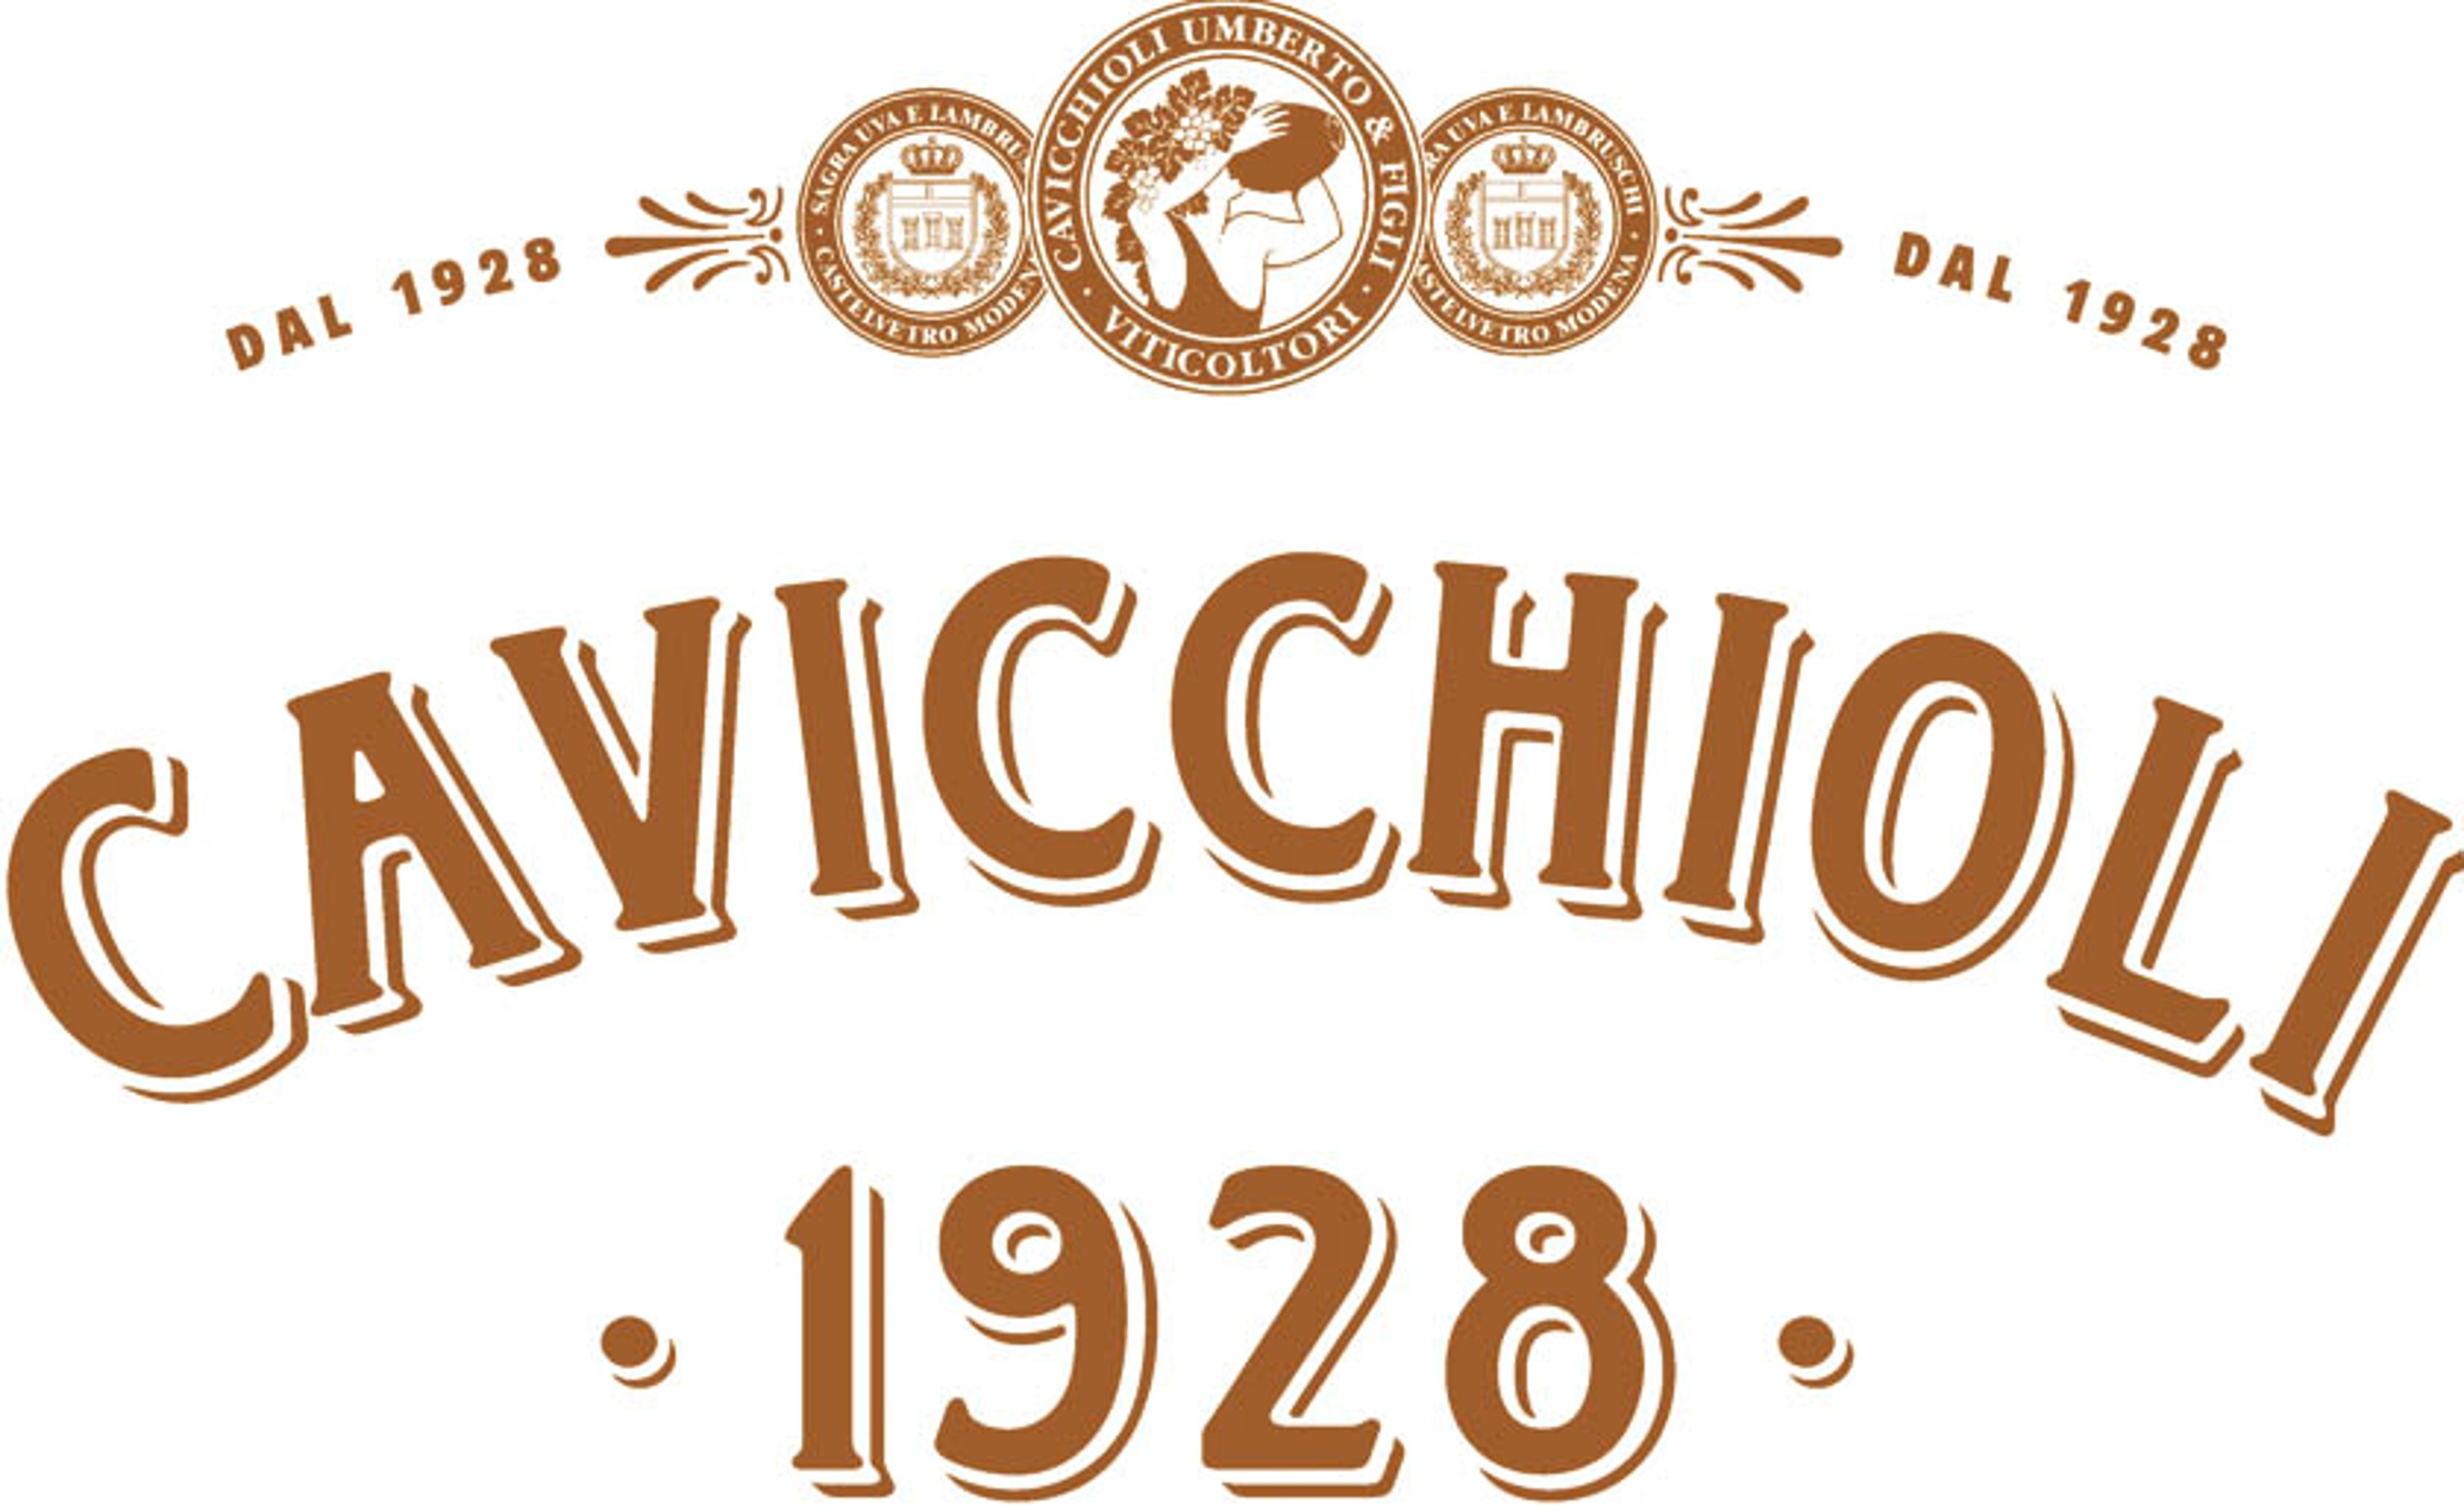 Logo CAVICCHIOLI 1928 Winzer